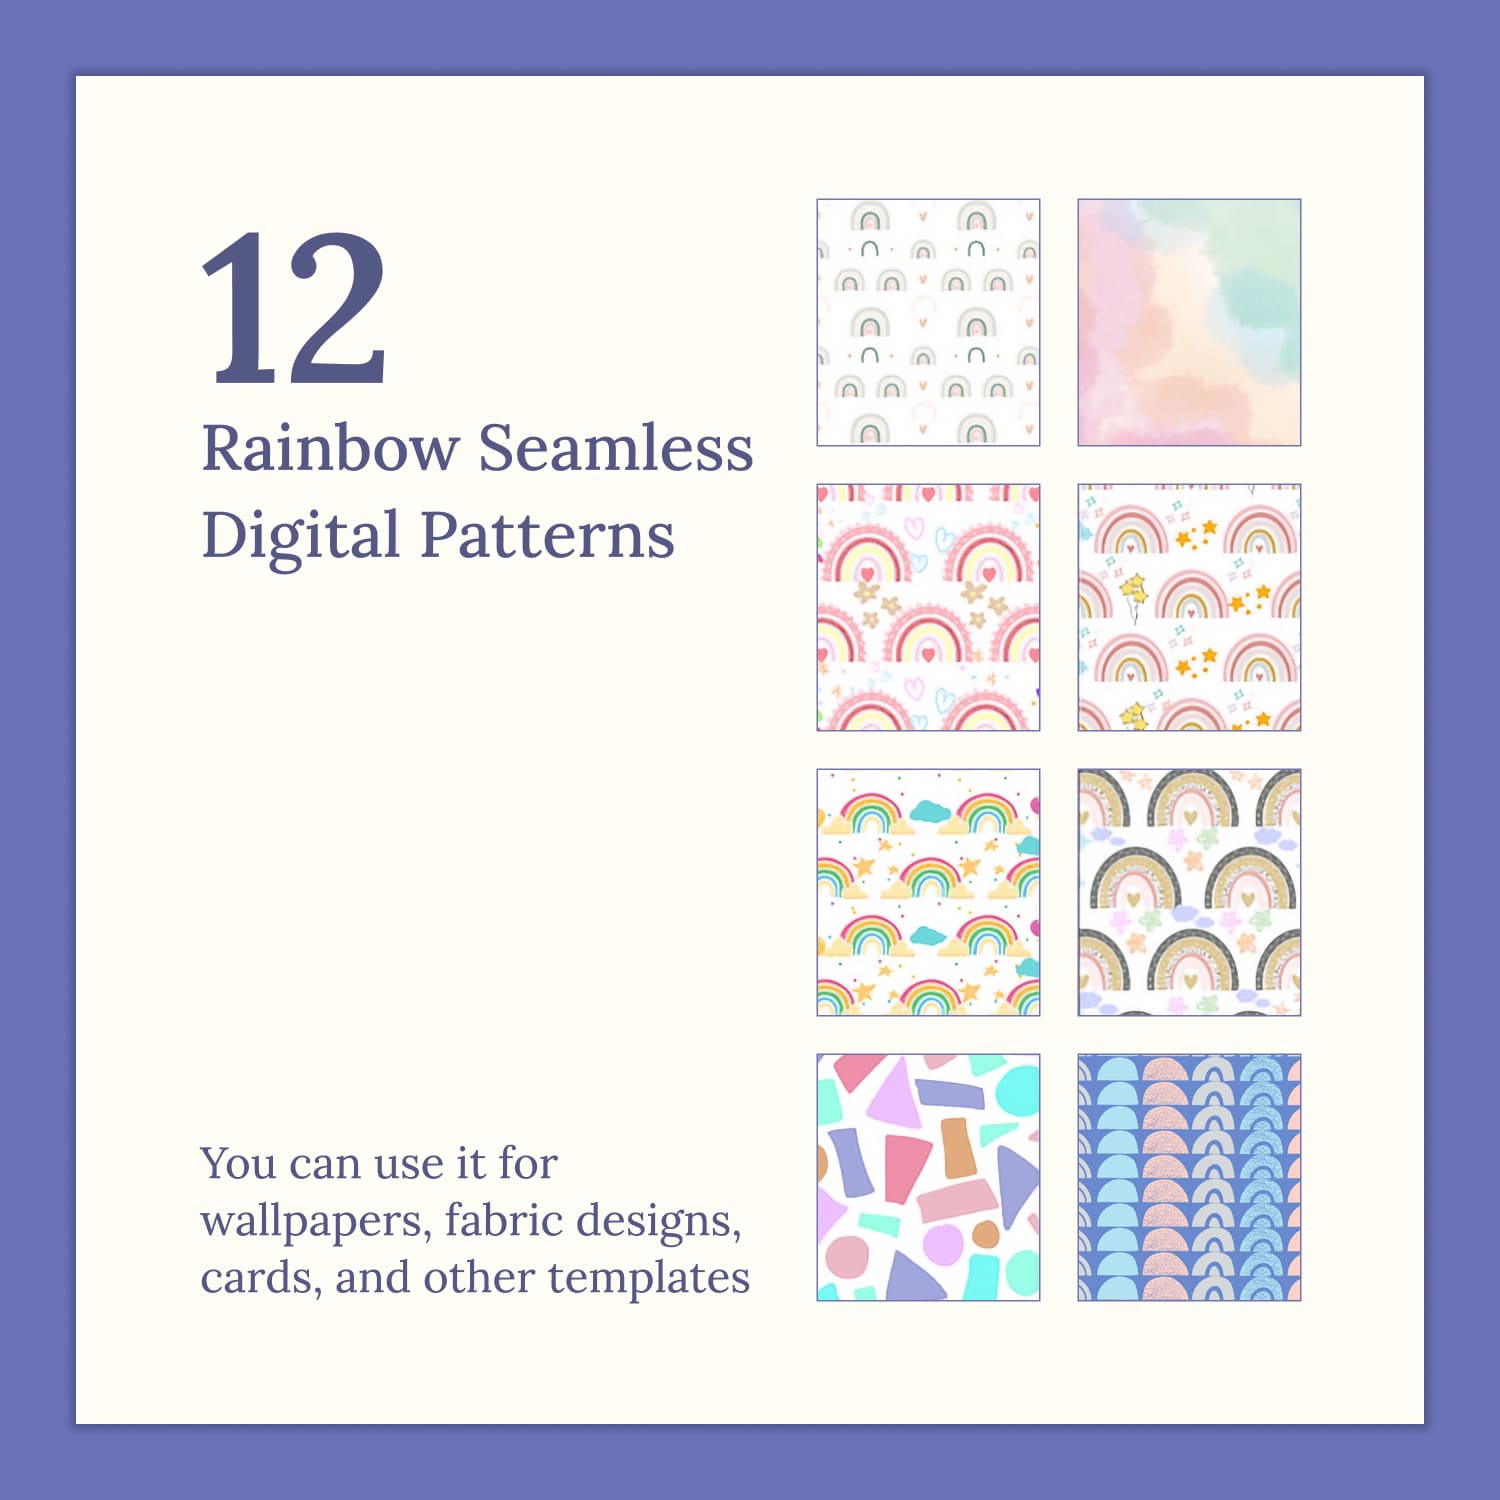 12 Rainbow Seamless Digital Patterns.